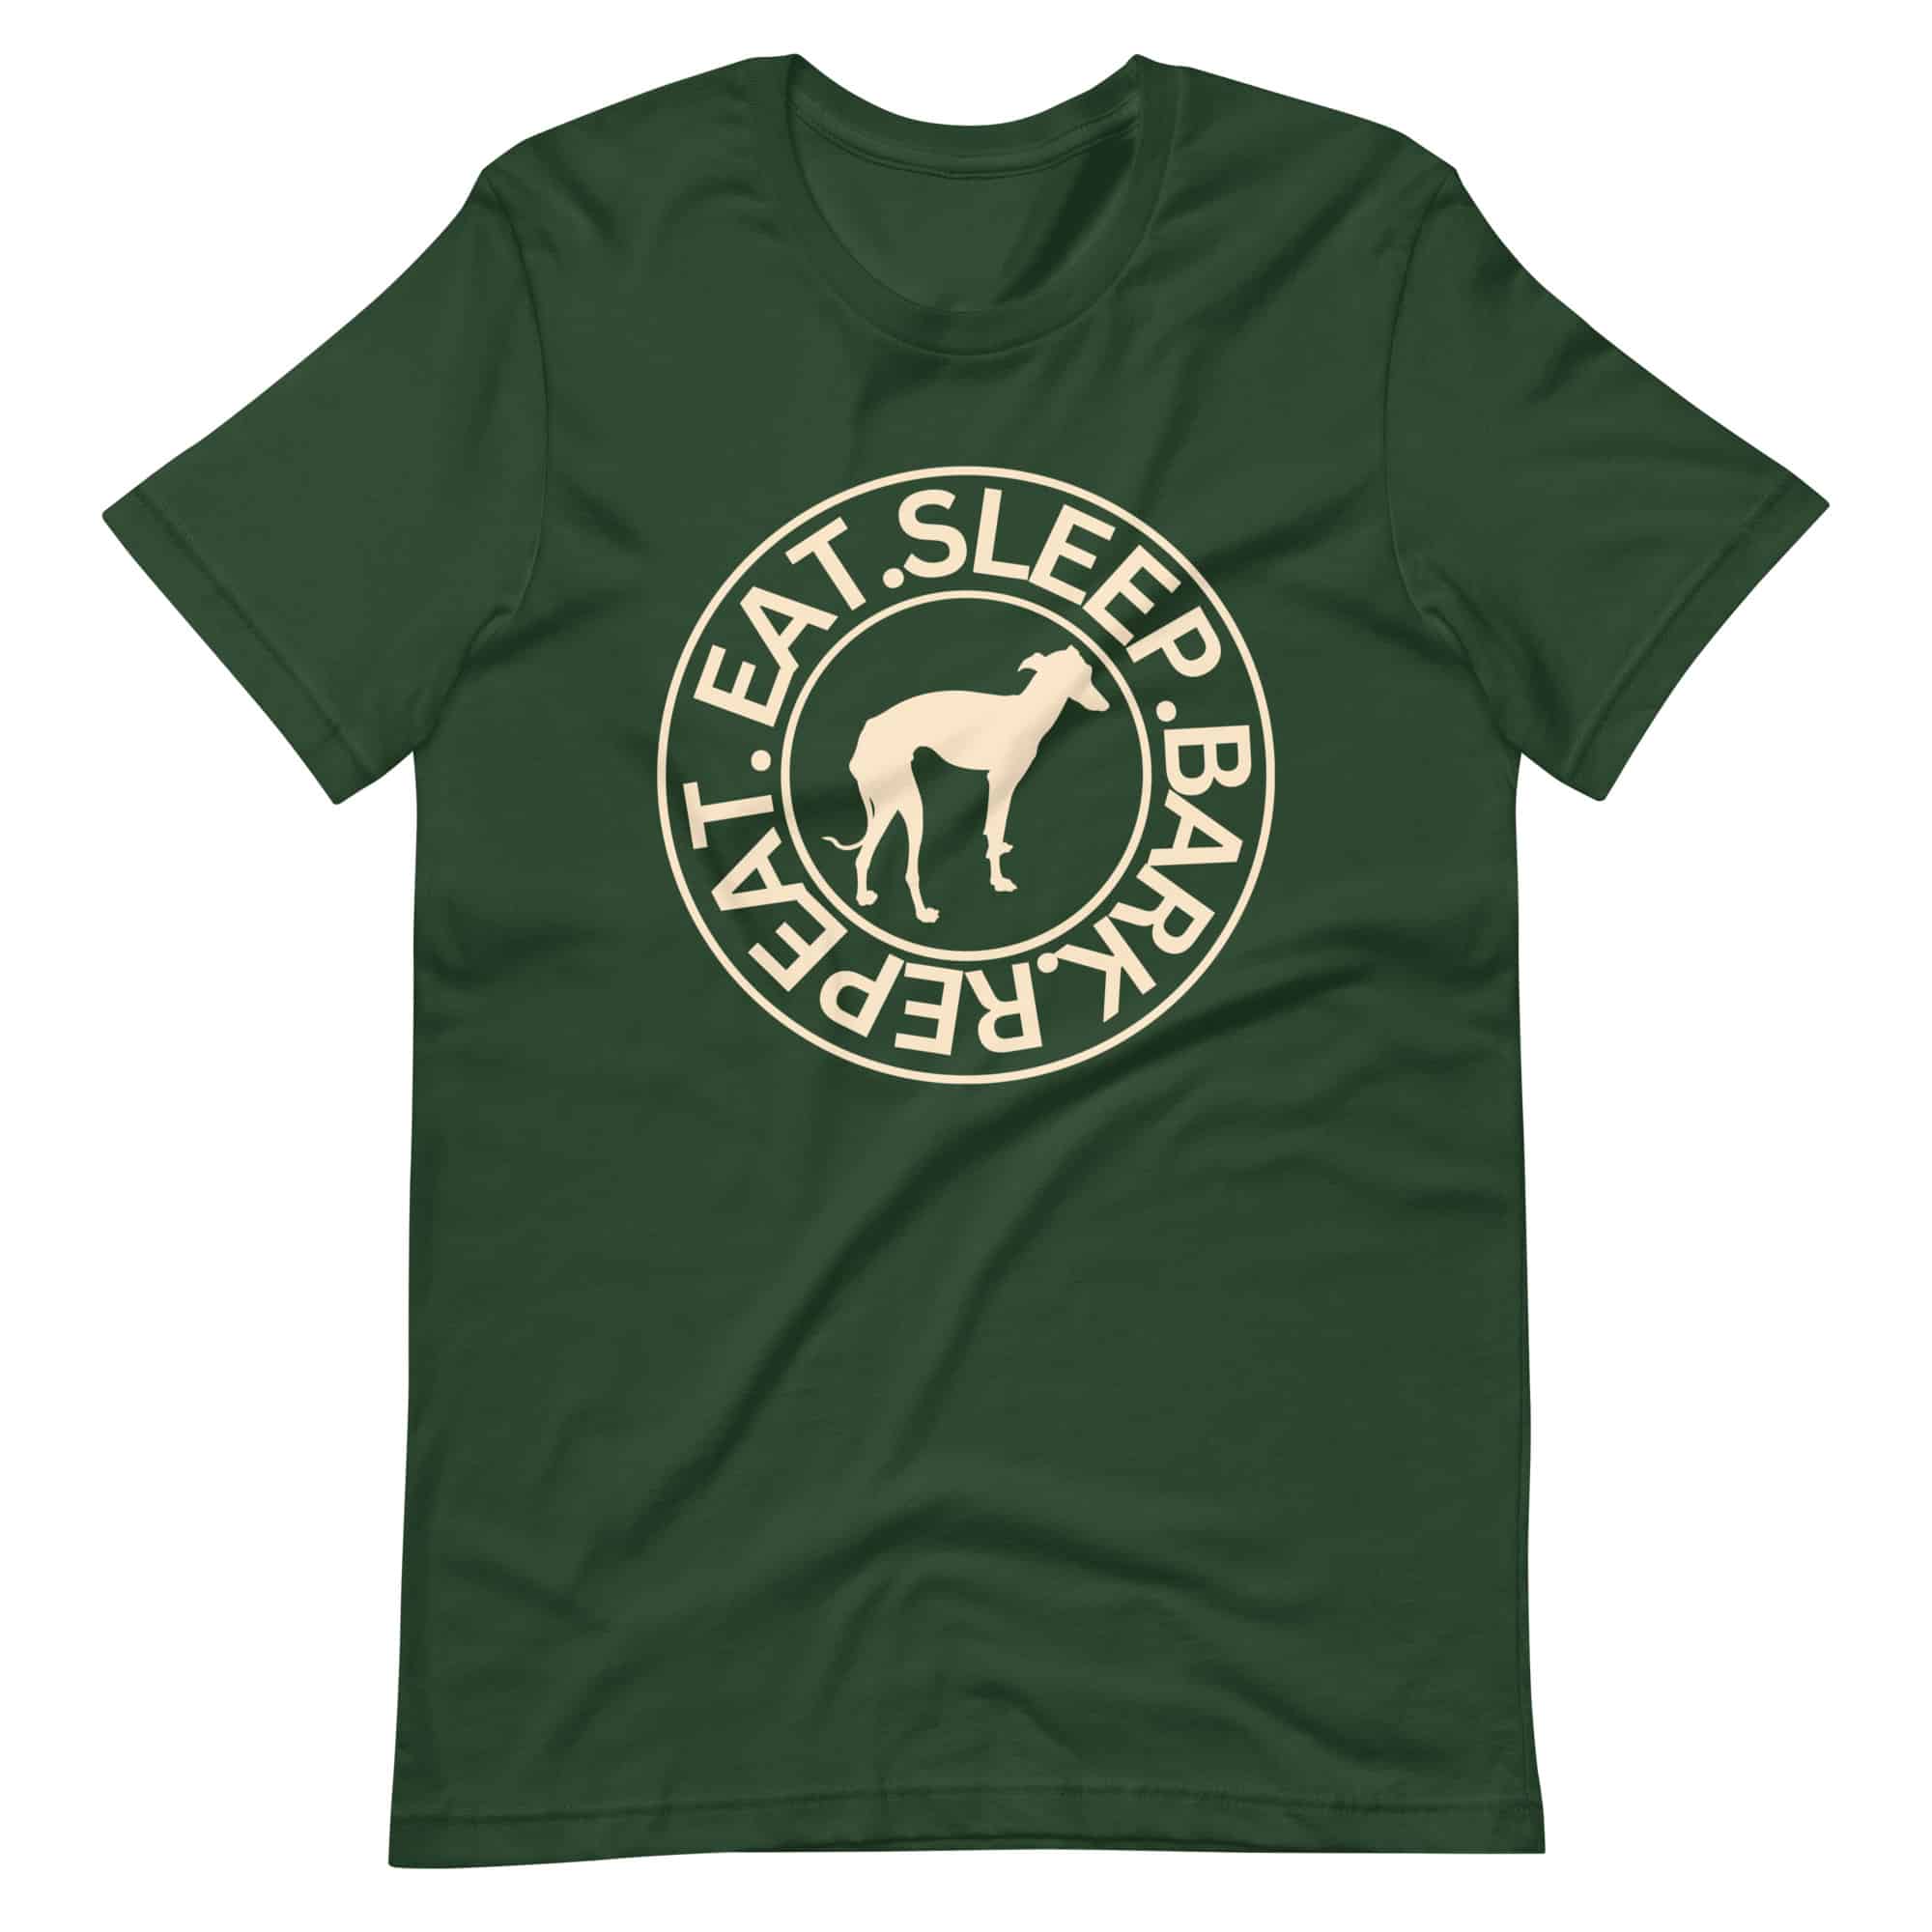 Eat Sleep Bark Repeat Italian Greyhound Unisex T-Shirt. Forest